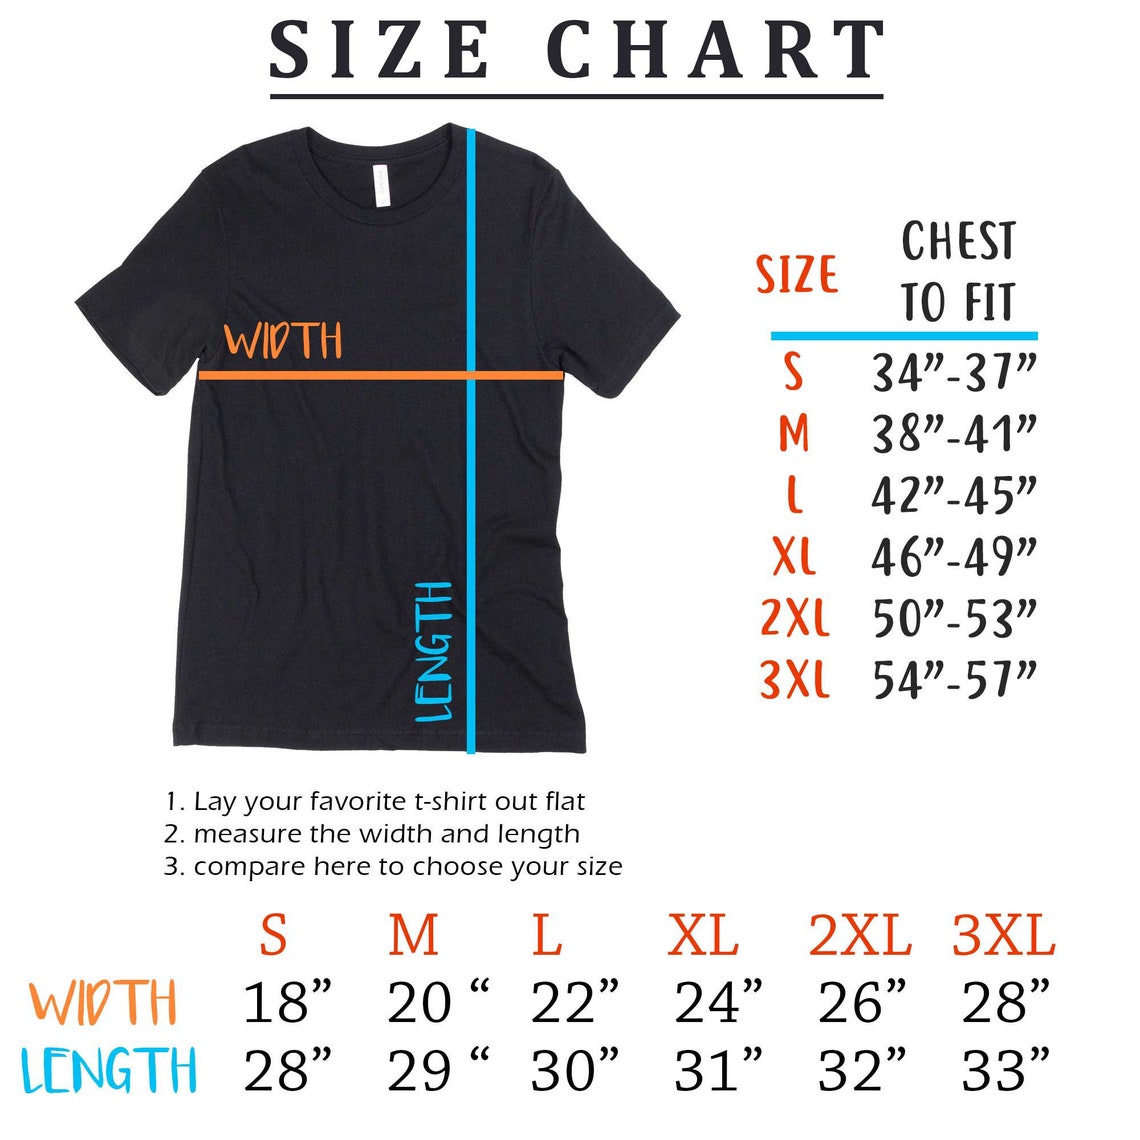 Lacey Chabert Shirt Design Retro Style Cool Fan Art T-shirt | Etsy